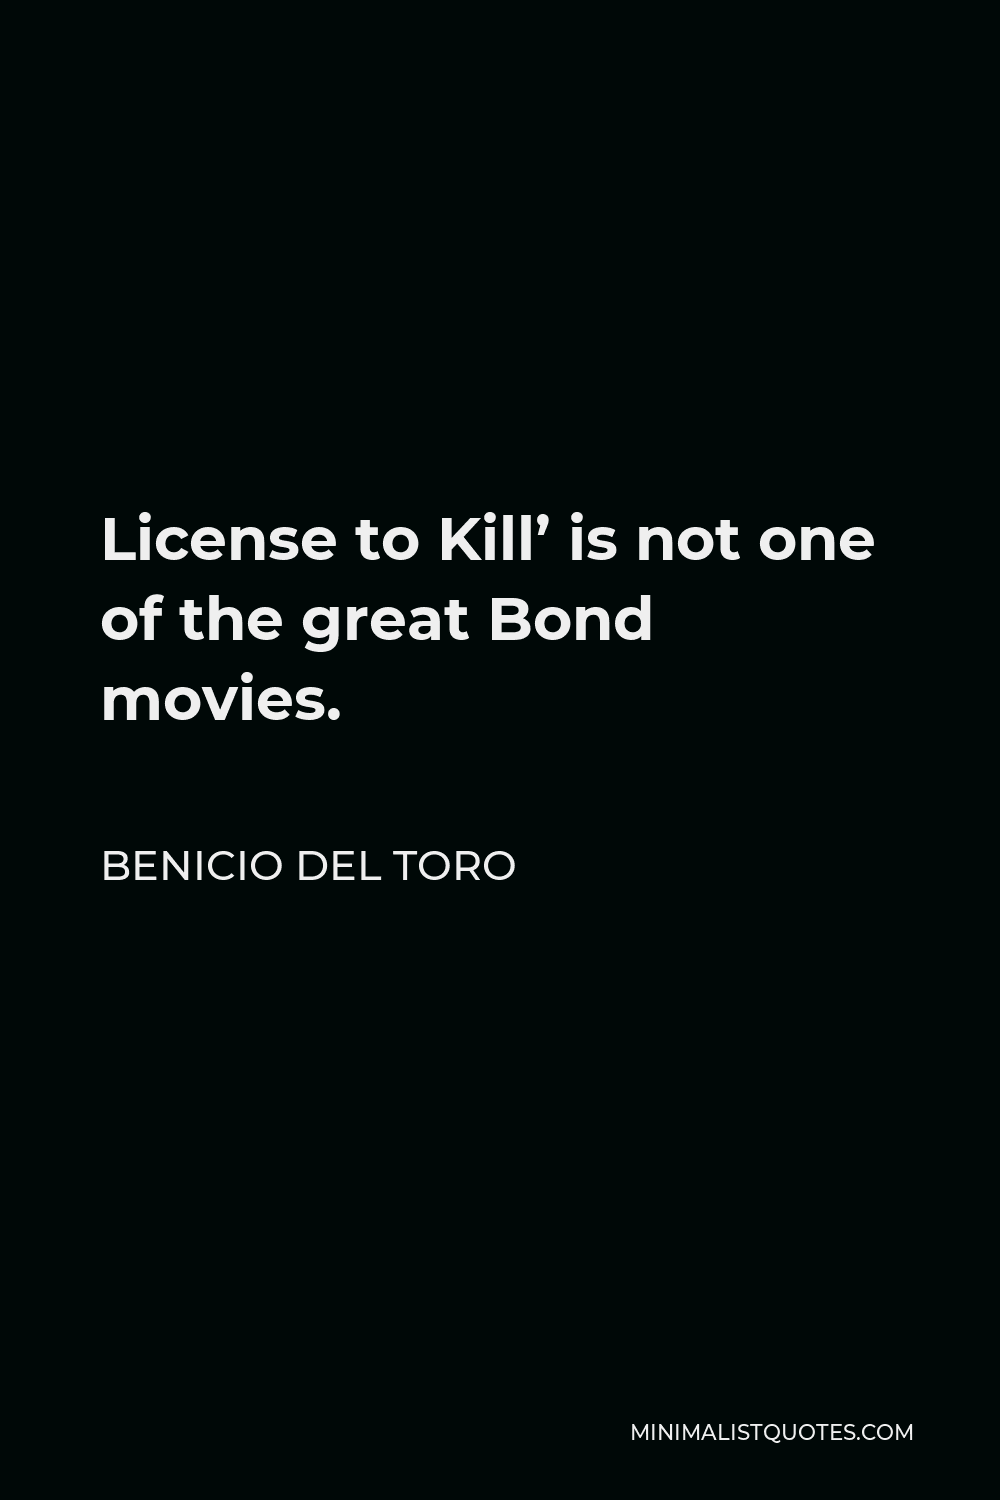 Benicio Del Toro Quote - License to Kill’ is not one of the great Bond movies.